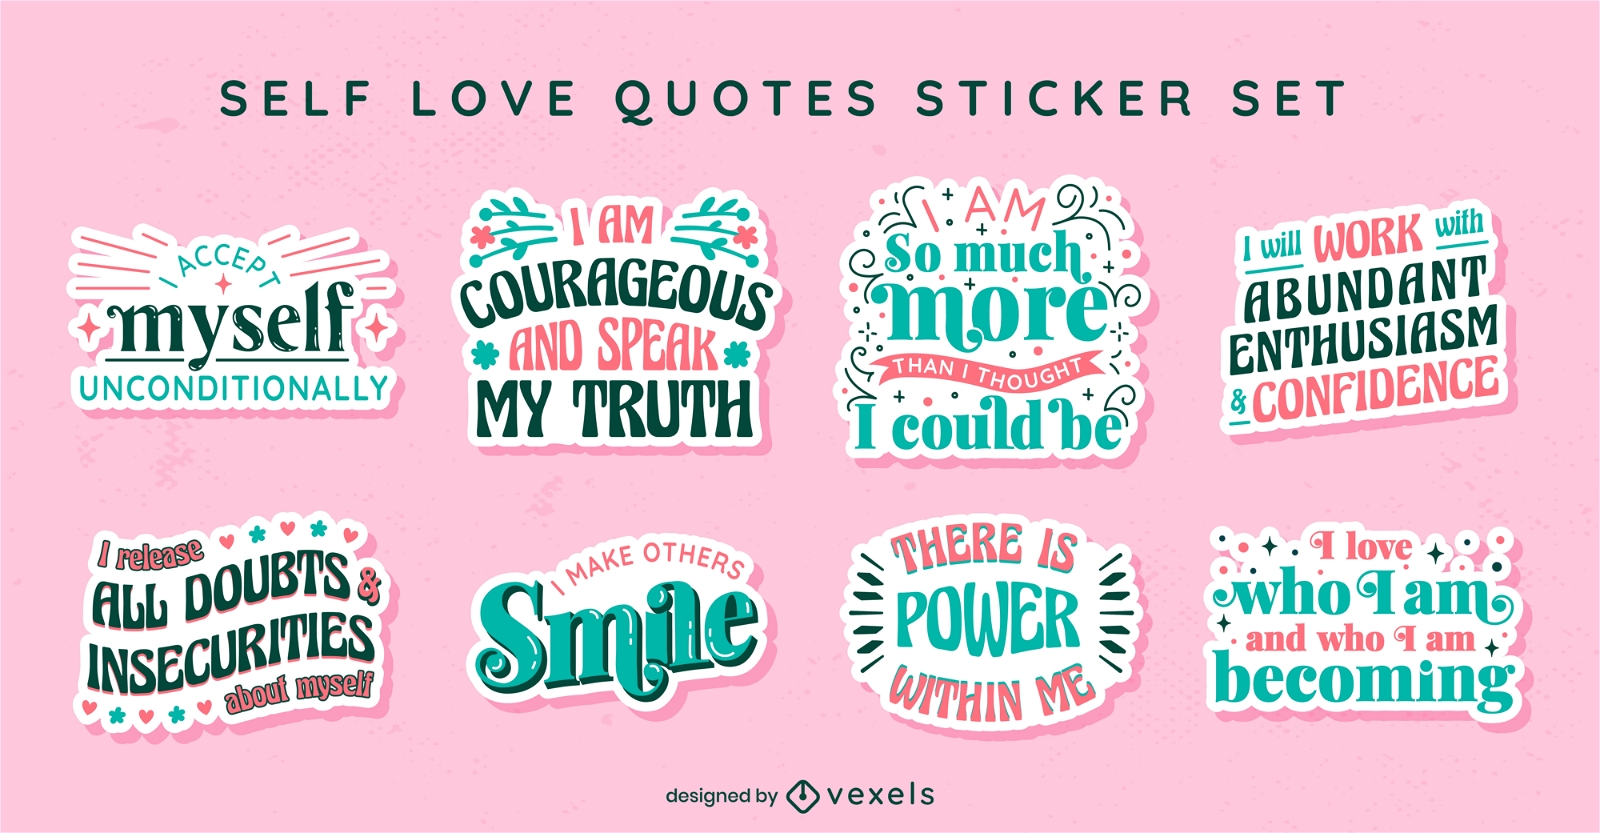 Self love affirmations sticker set